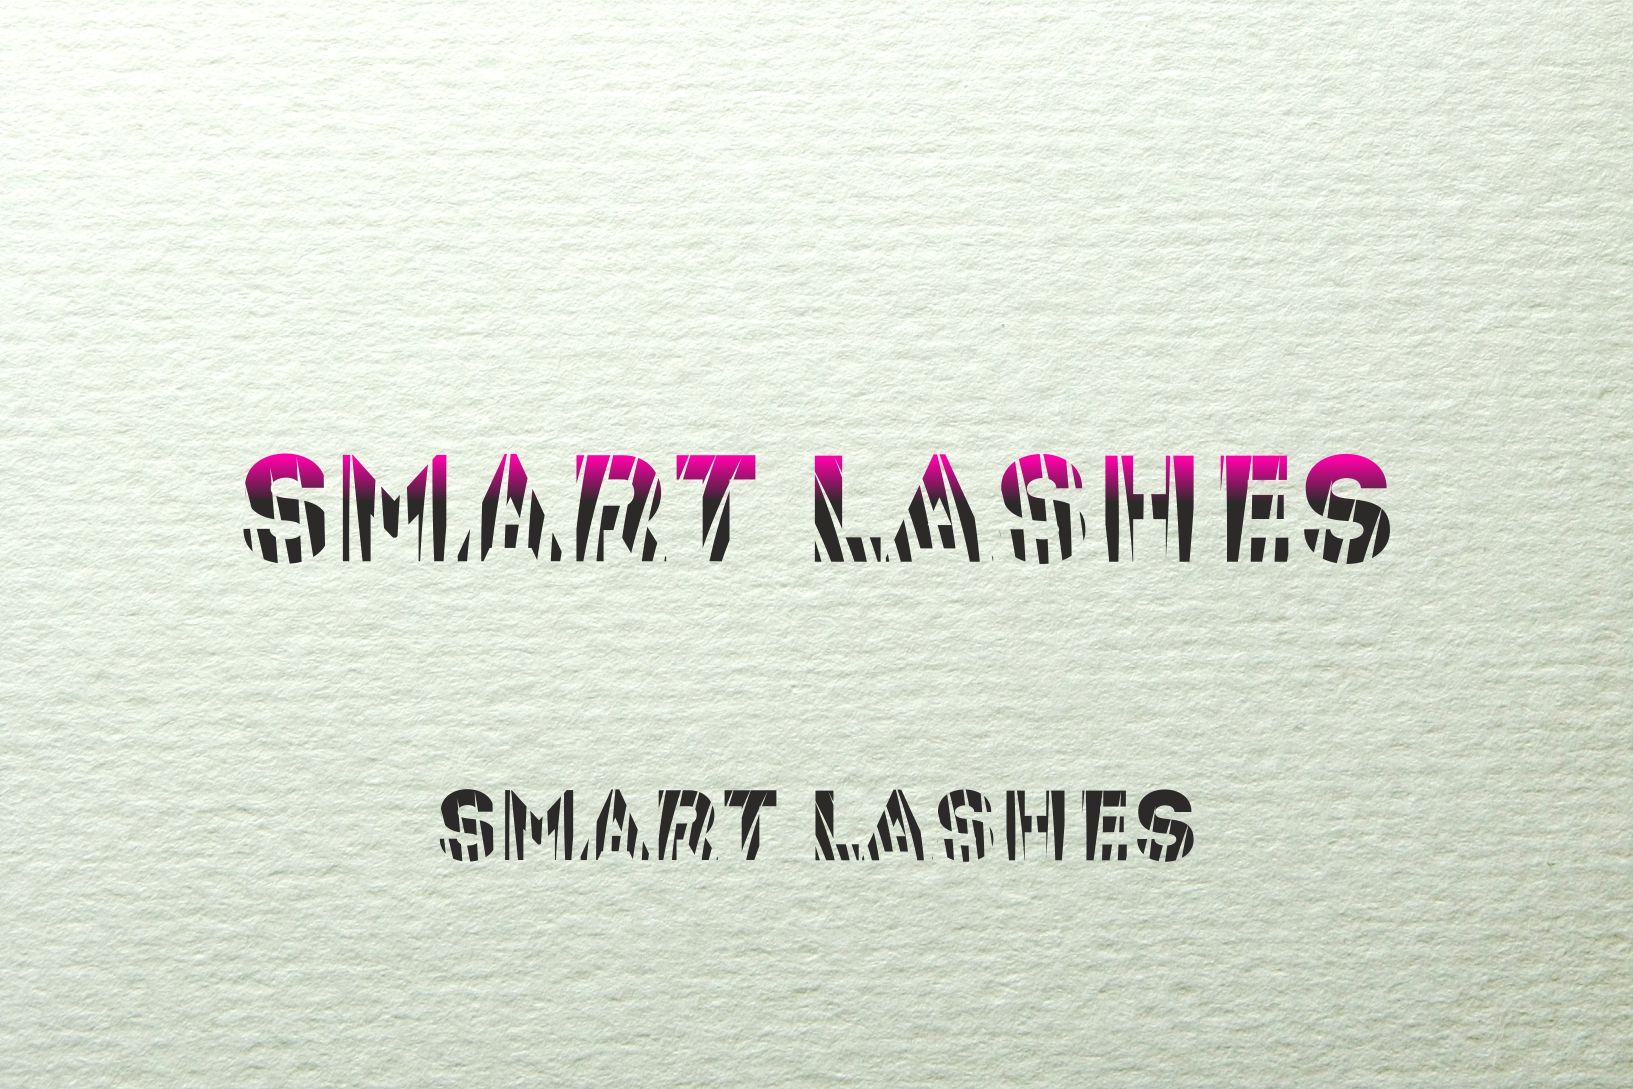 Логотип для Smart Lashes - дизайнер kas24